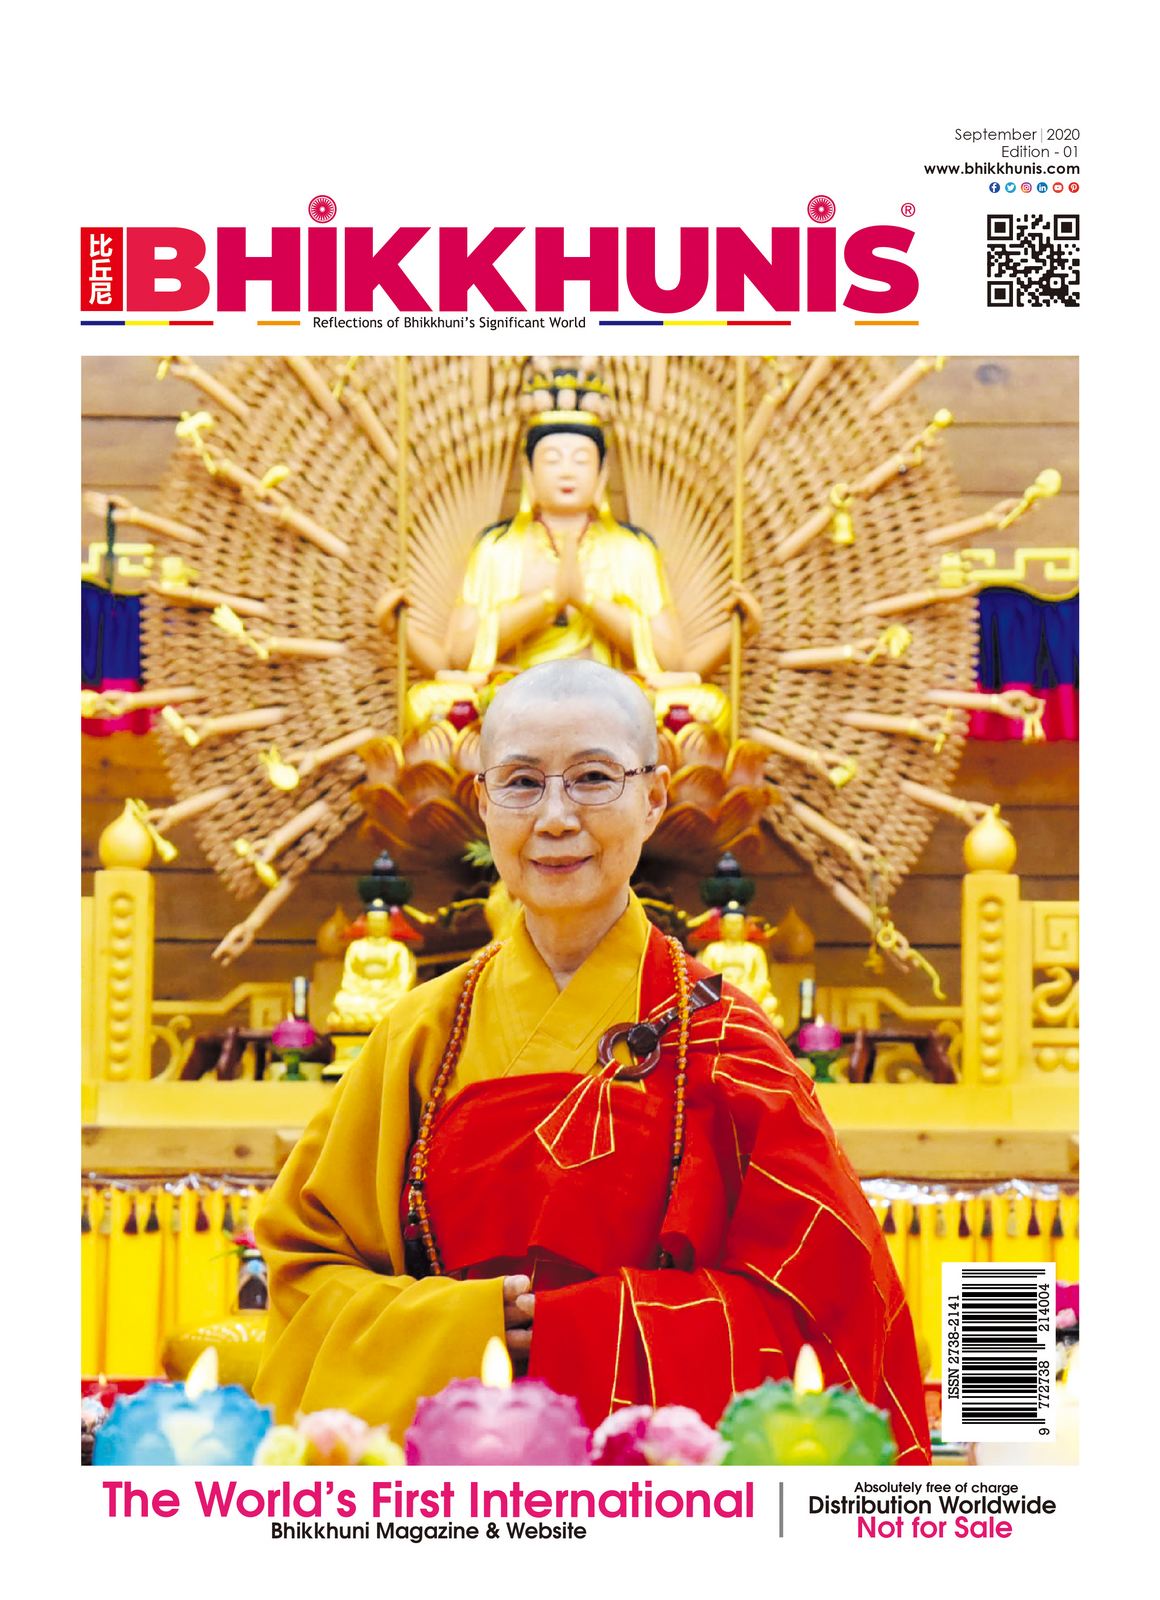 #Bhikkhunis_International_Buddhist_Magazine_September_2020_Front_Page